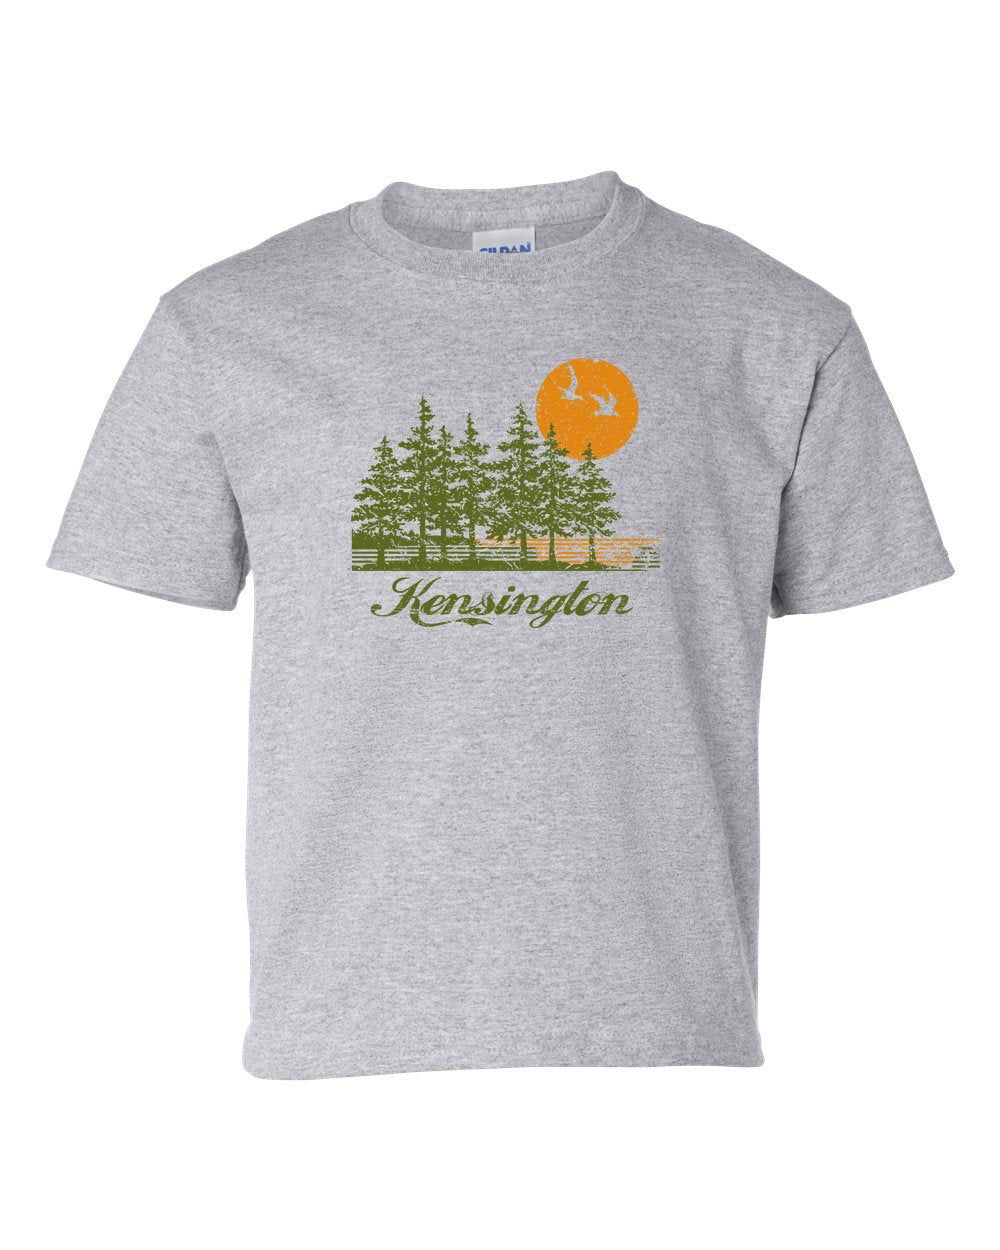 Kensington KIDS T-Shirt